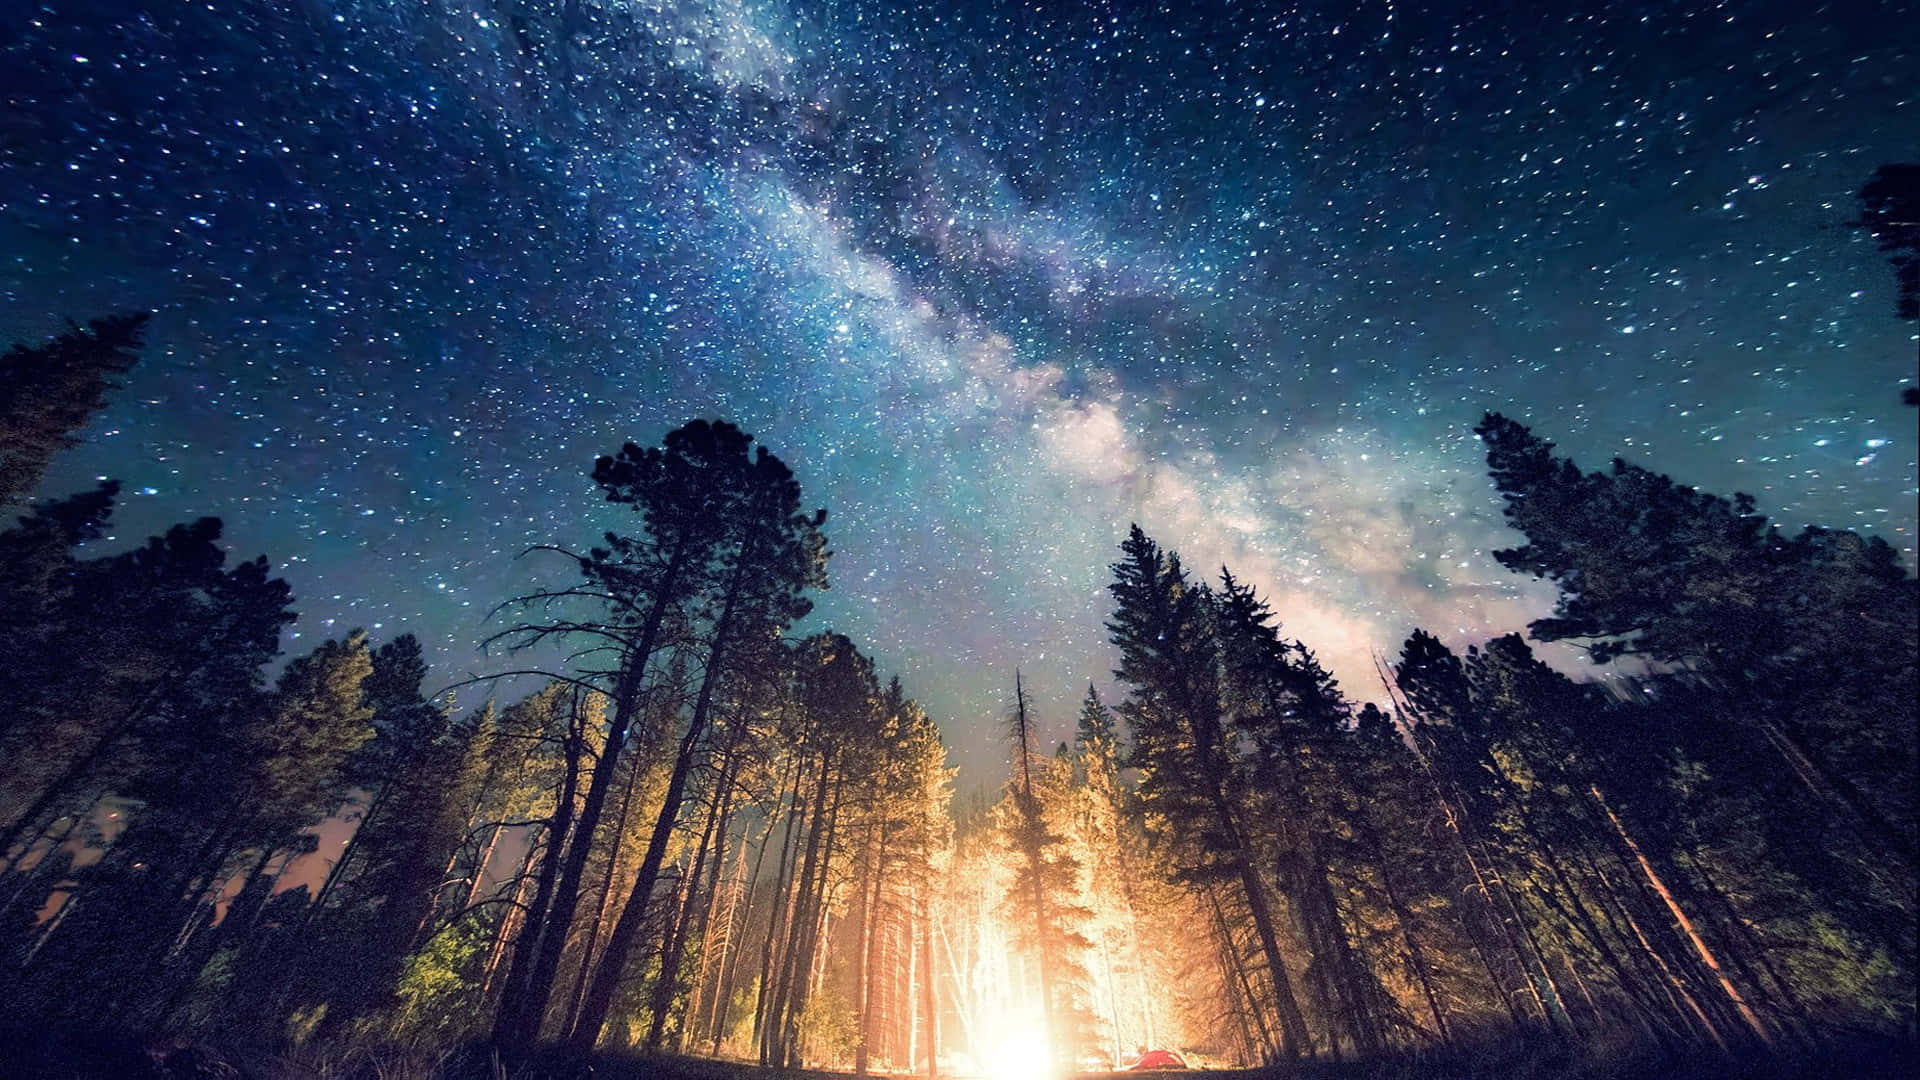 Best Desktop PC Background Forest Under The Starry Night Sky